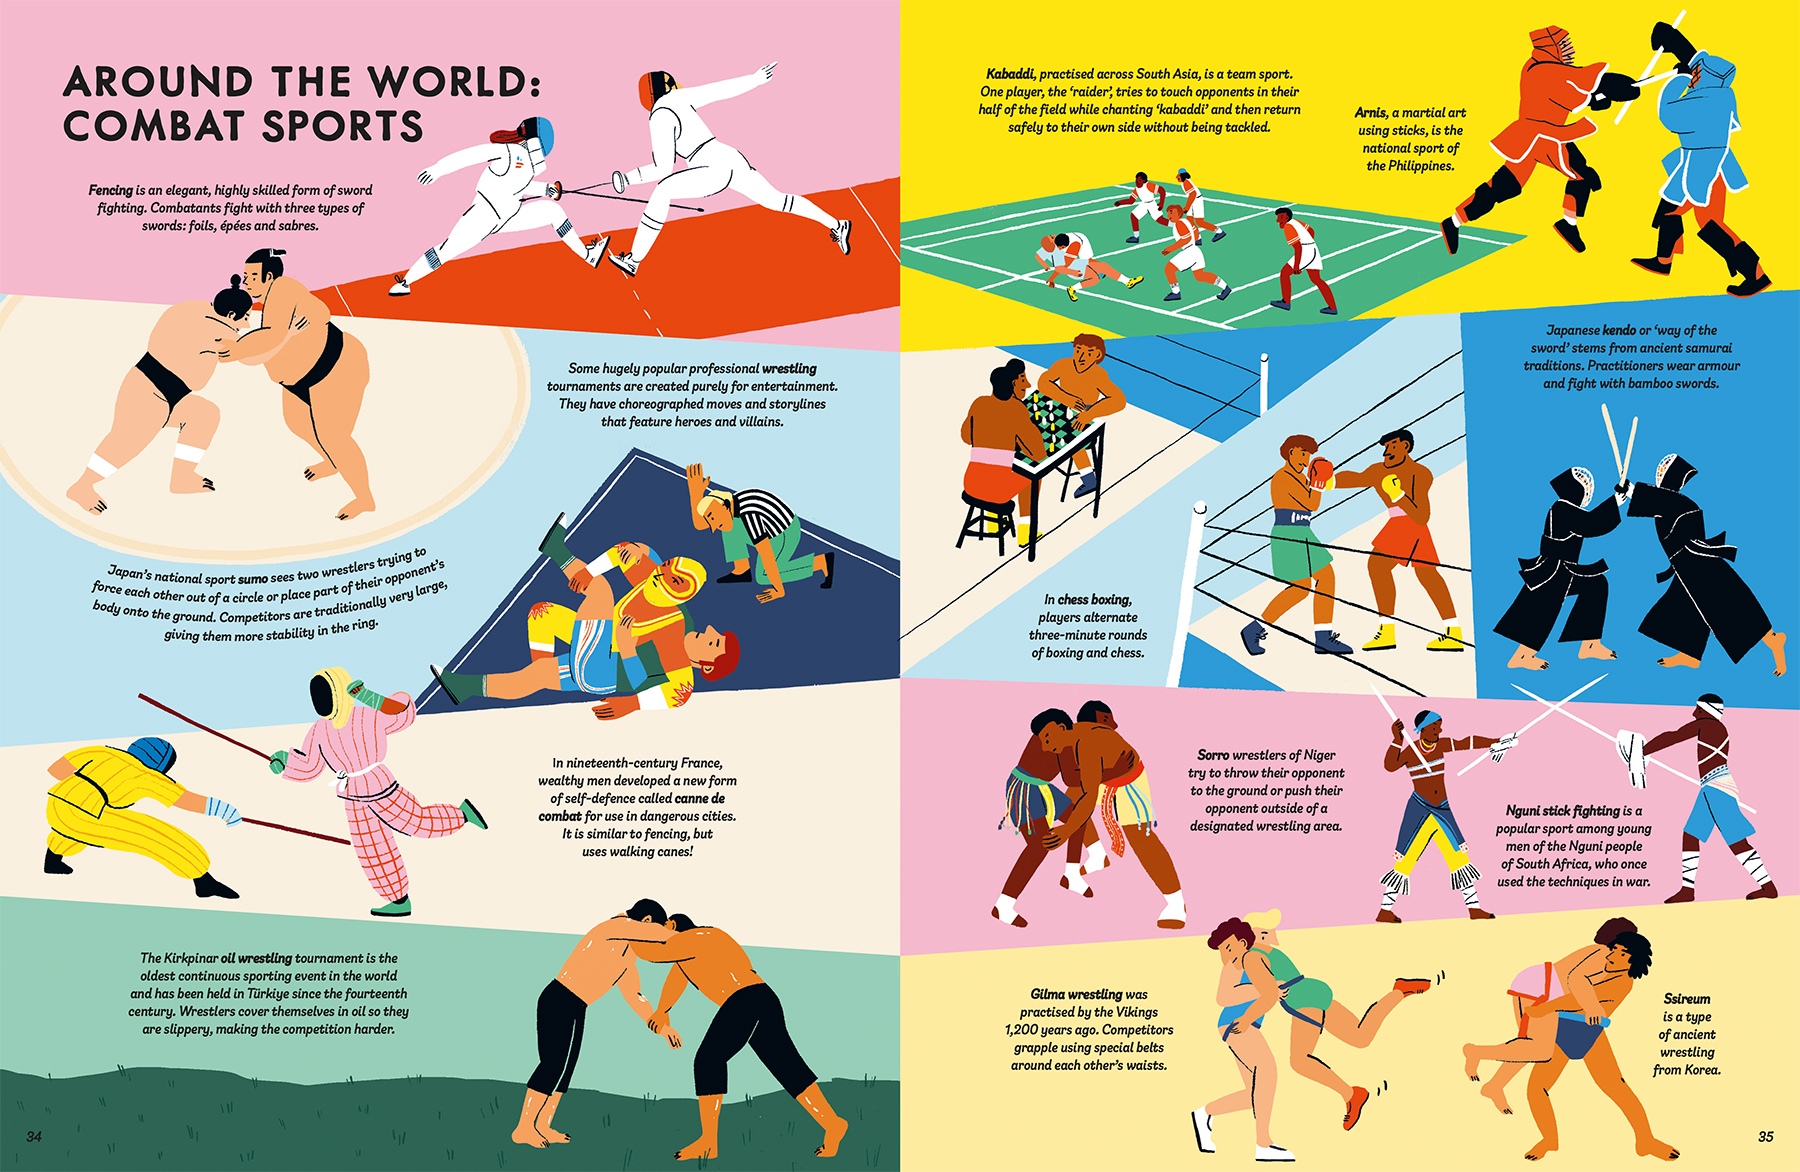 world-of-sport-non-fiction-book-illustration-sorro-nguni-stick-fighting-gilma-ssireum-kendo-arnis-kabaddi-canne-de-combat-wrestling-sumo-fencing-violeta-noy